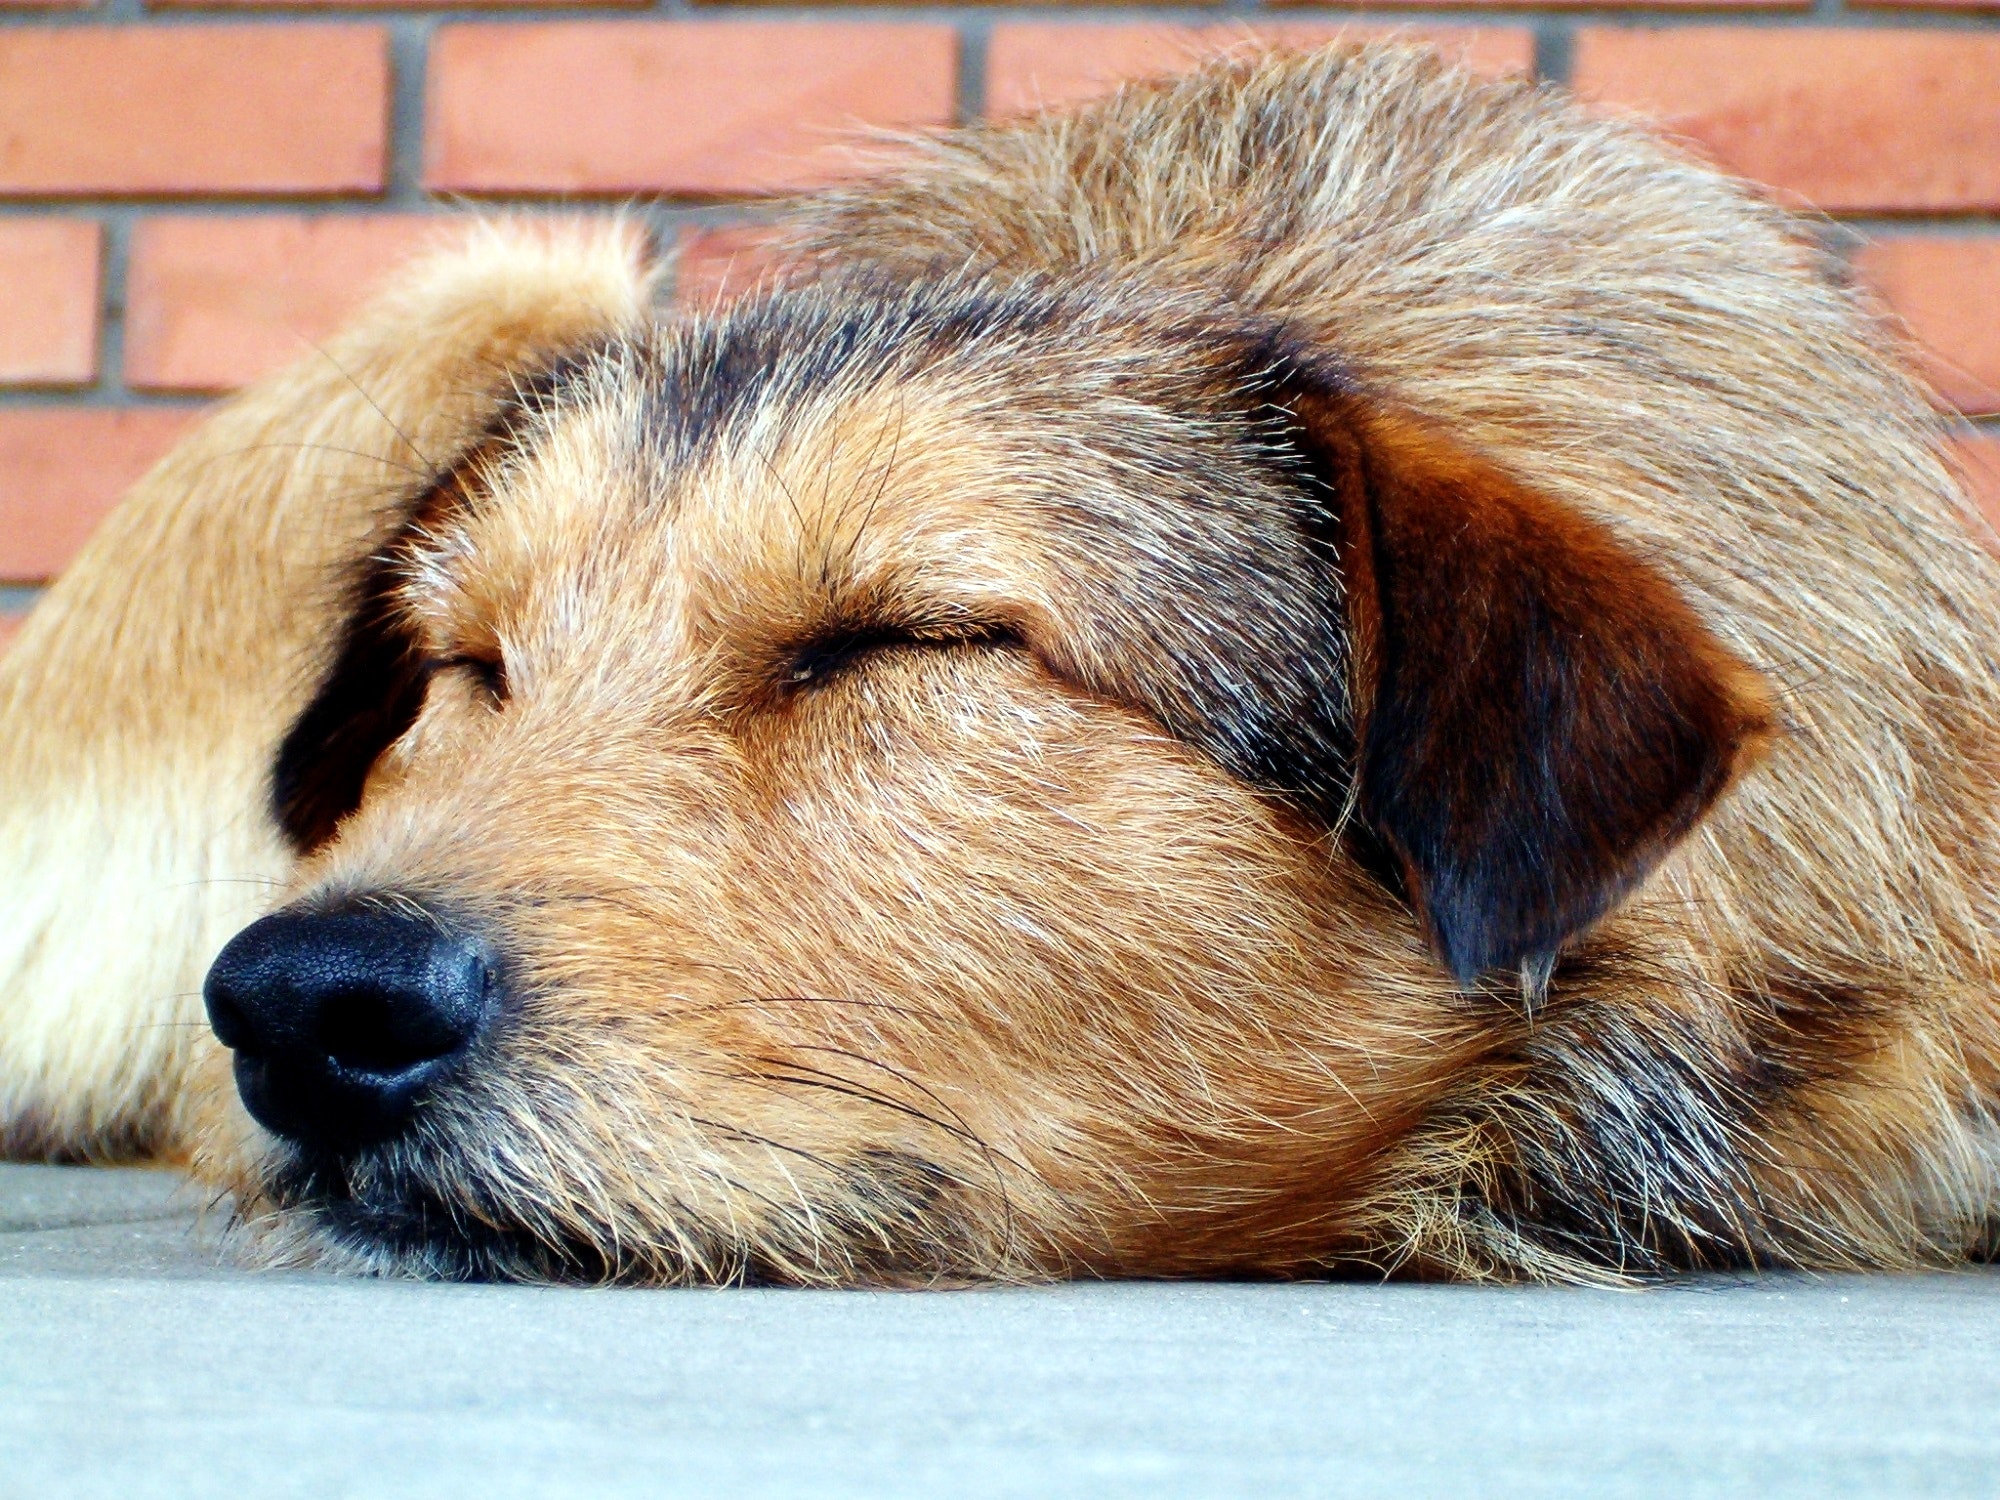 Free stock photos of sleeping dog · Pexels